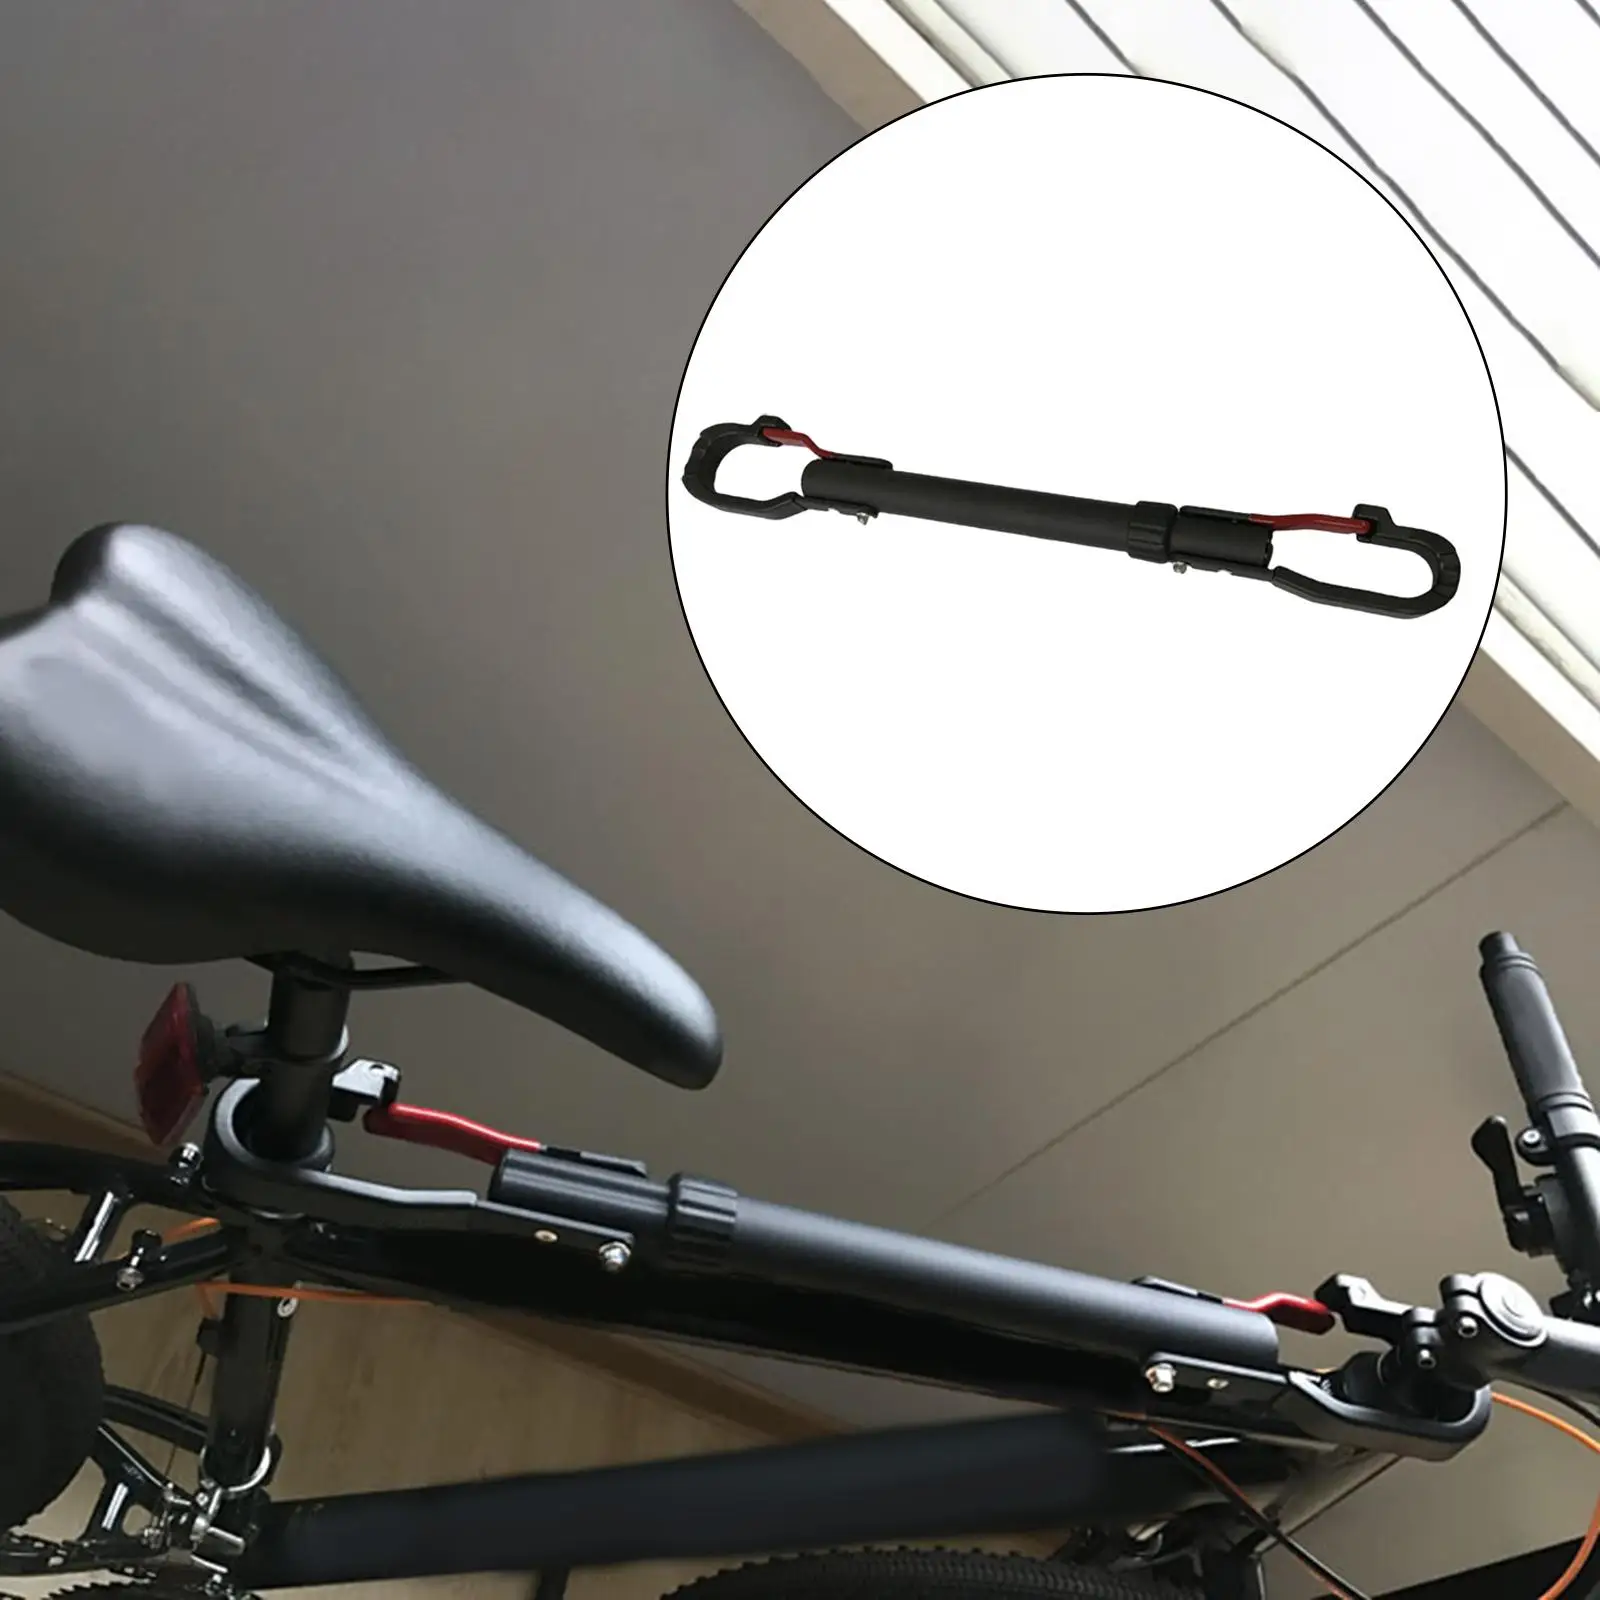 Bike Cross Bar Adapter Accessories Adapter for Bike Rack